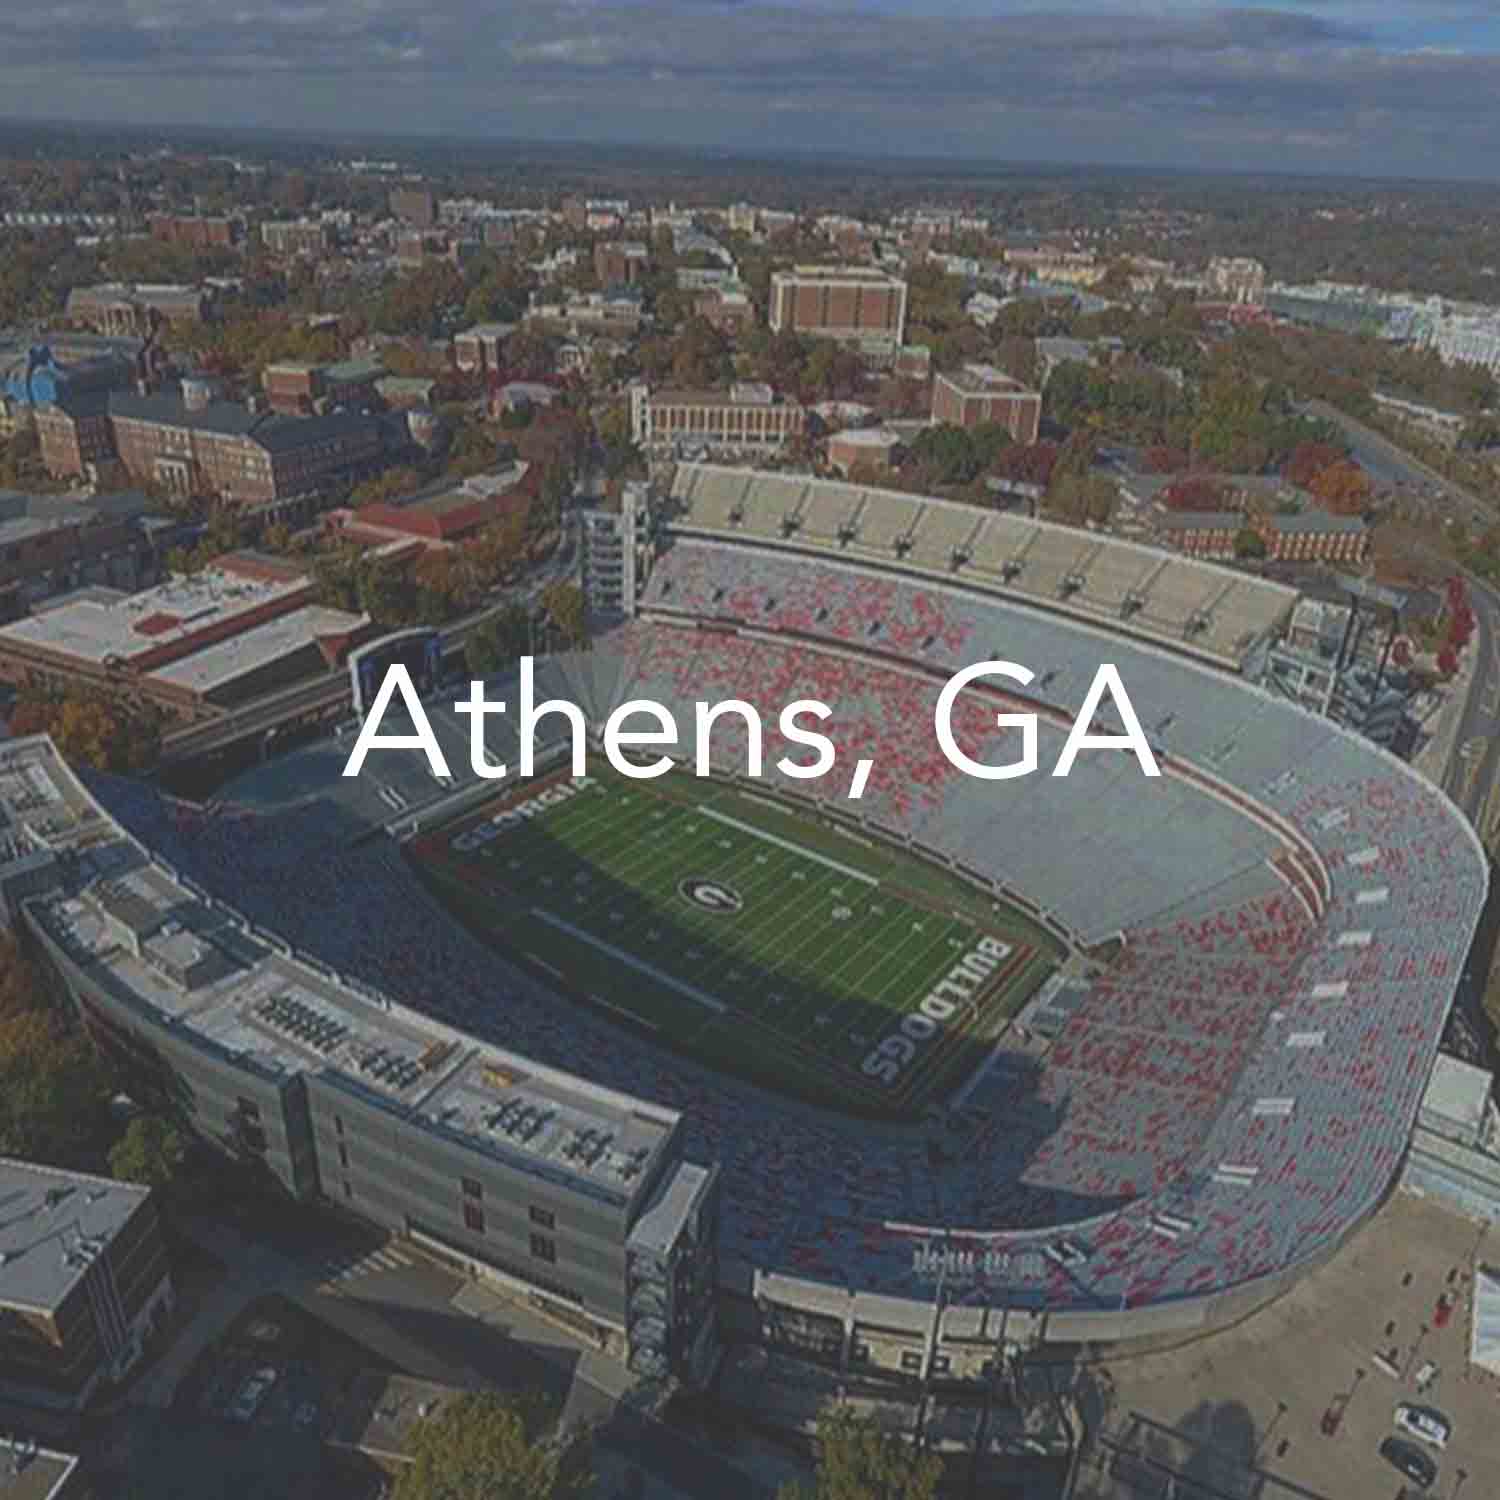 AthensWebsite.jpg